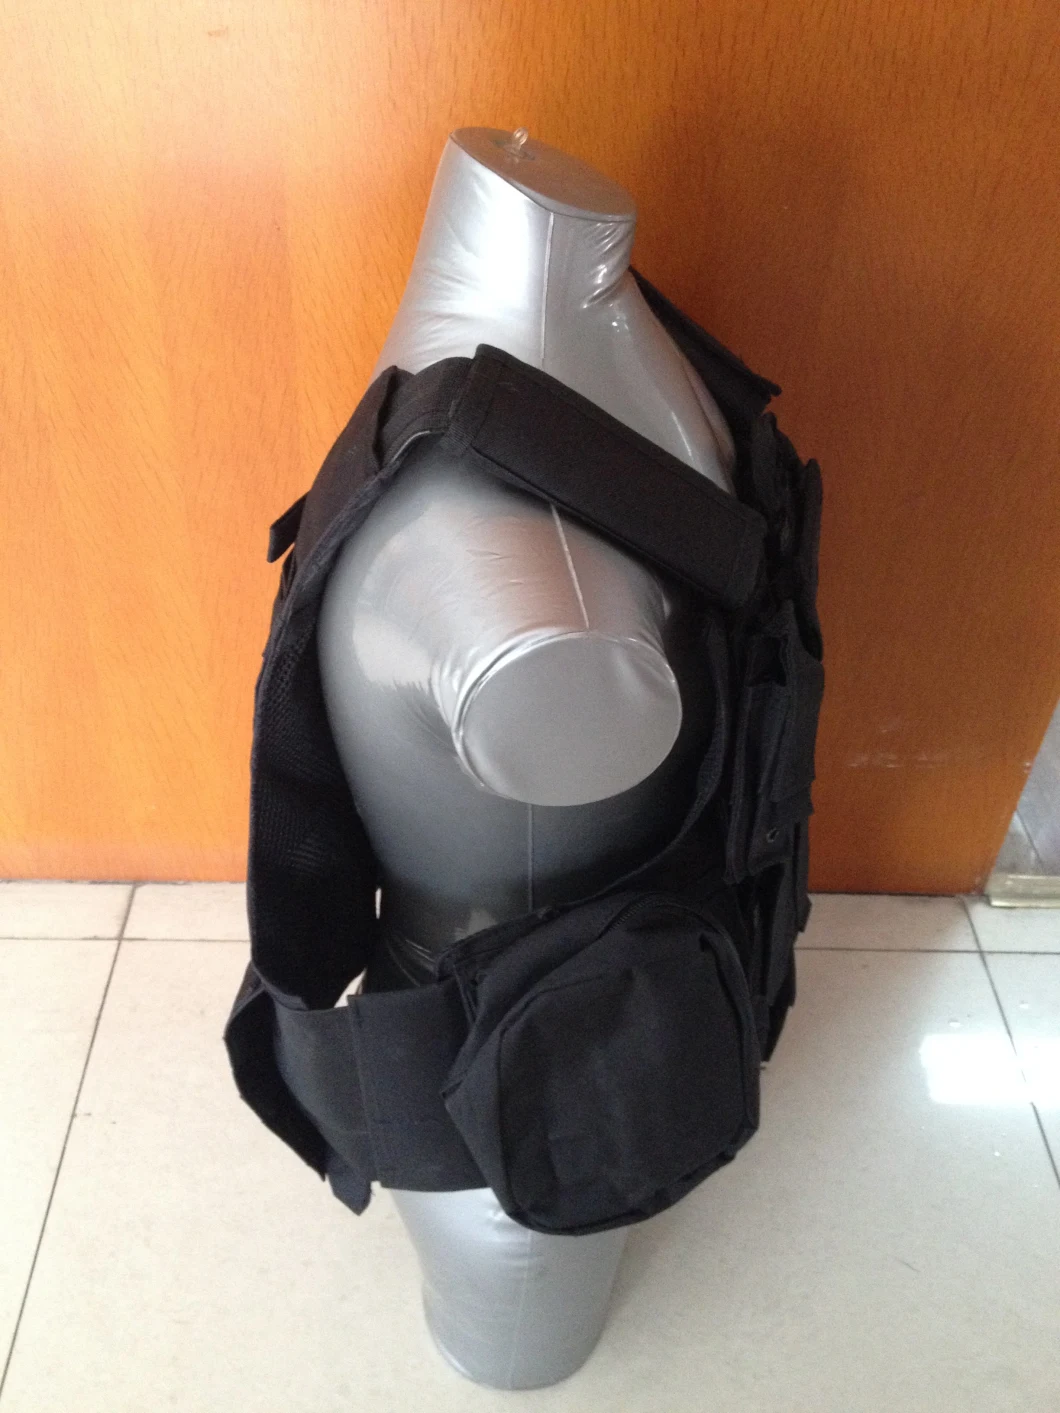 Bullet Proof Vest Ballistic Vest Protection Vest with Quick Release System